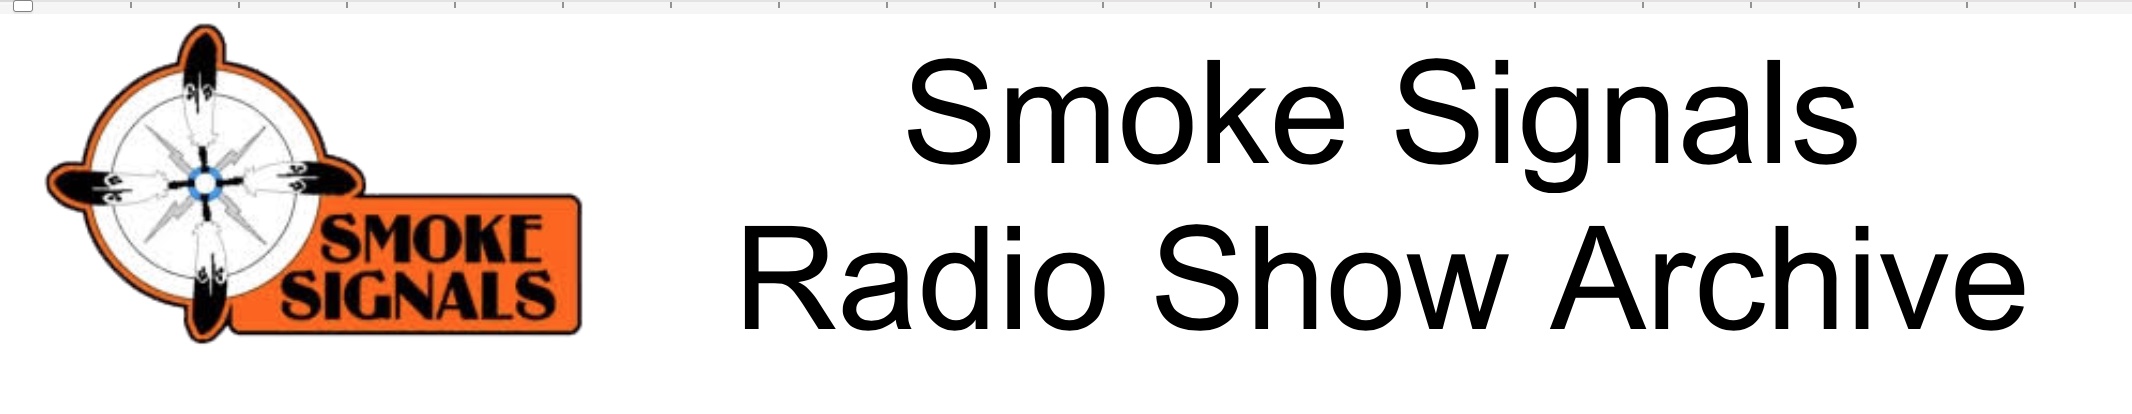 Smoke Signals Radio Show Archive